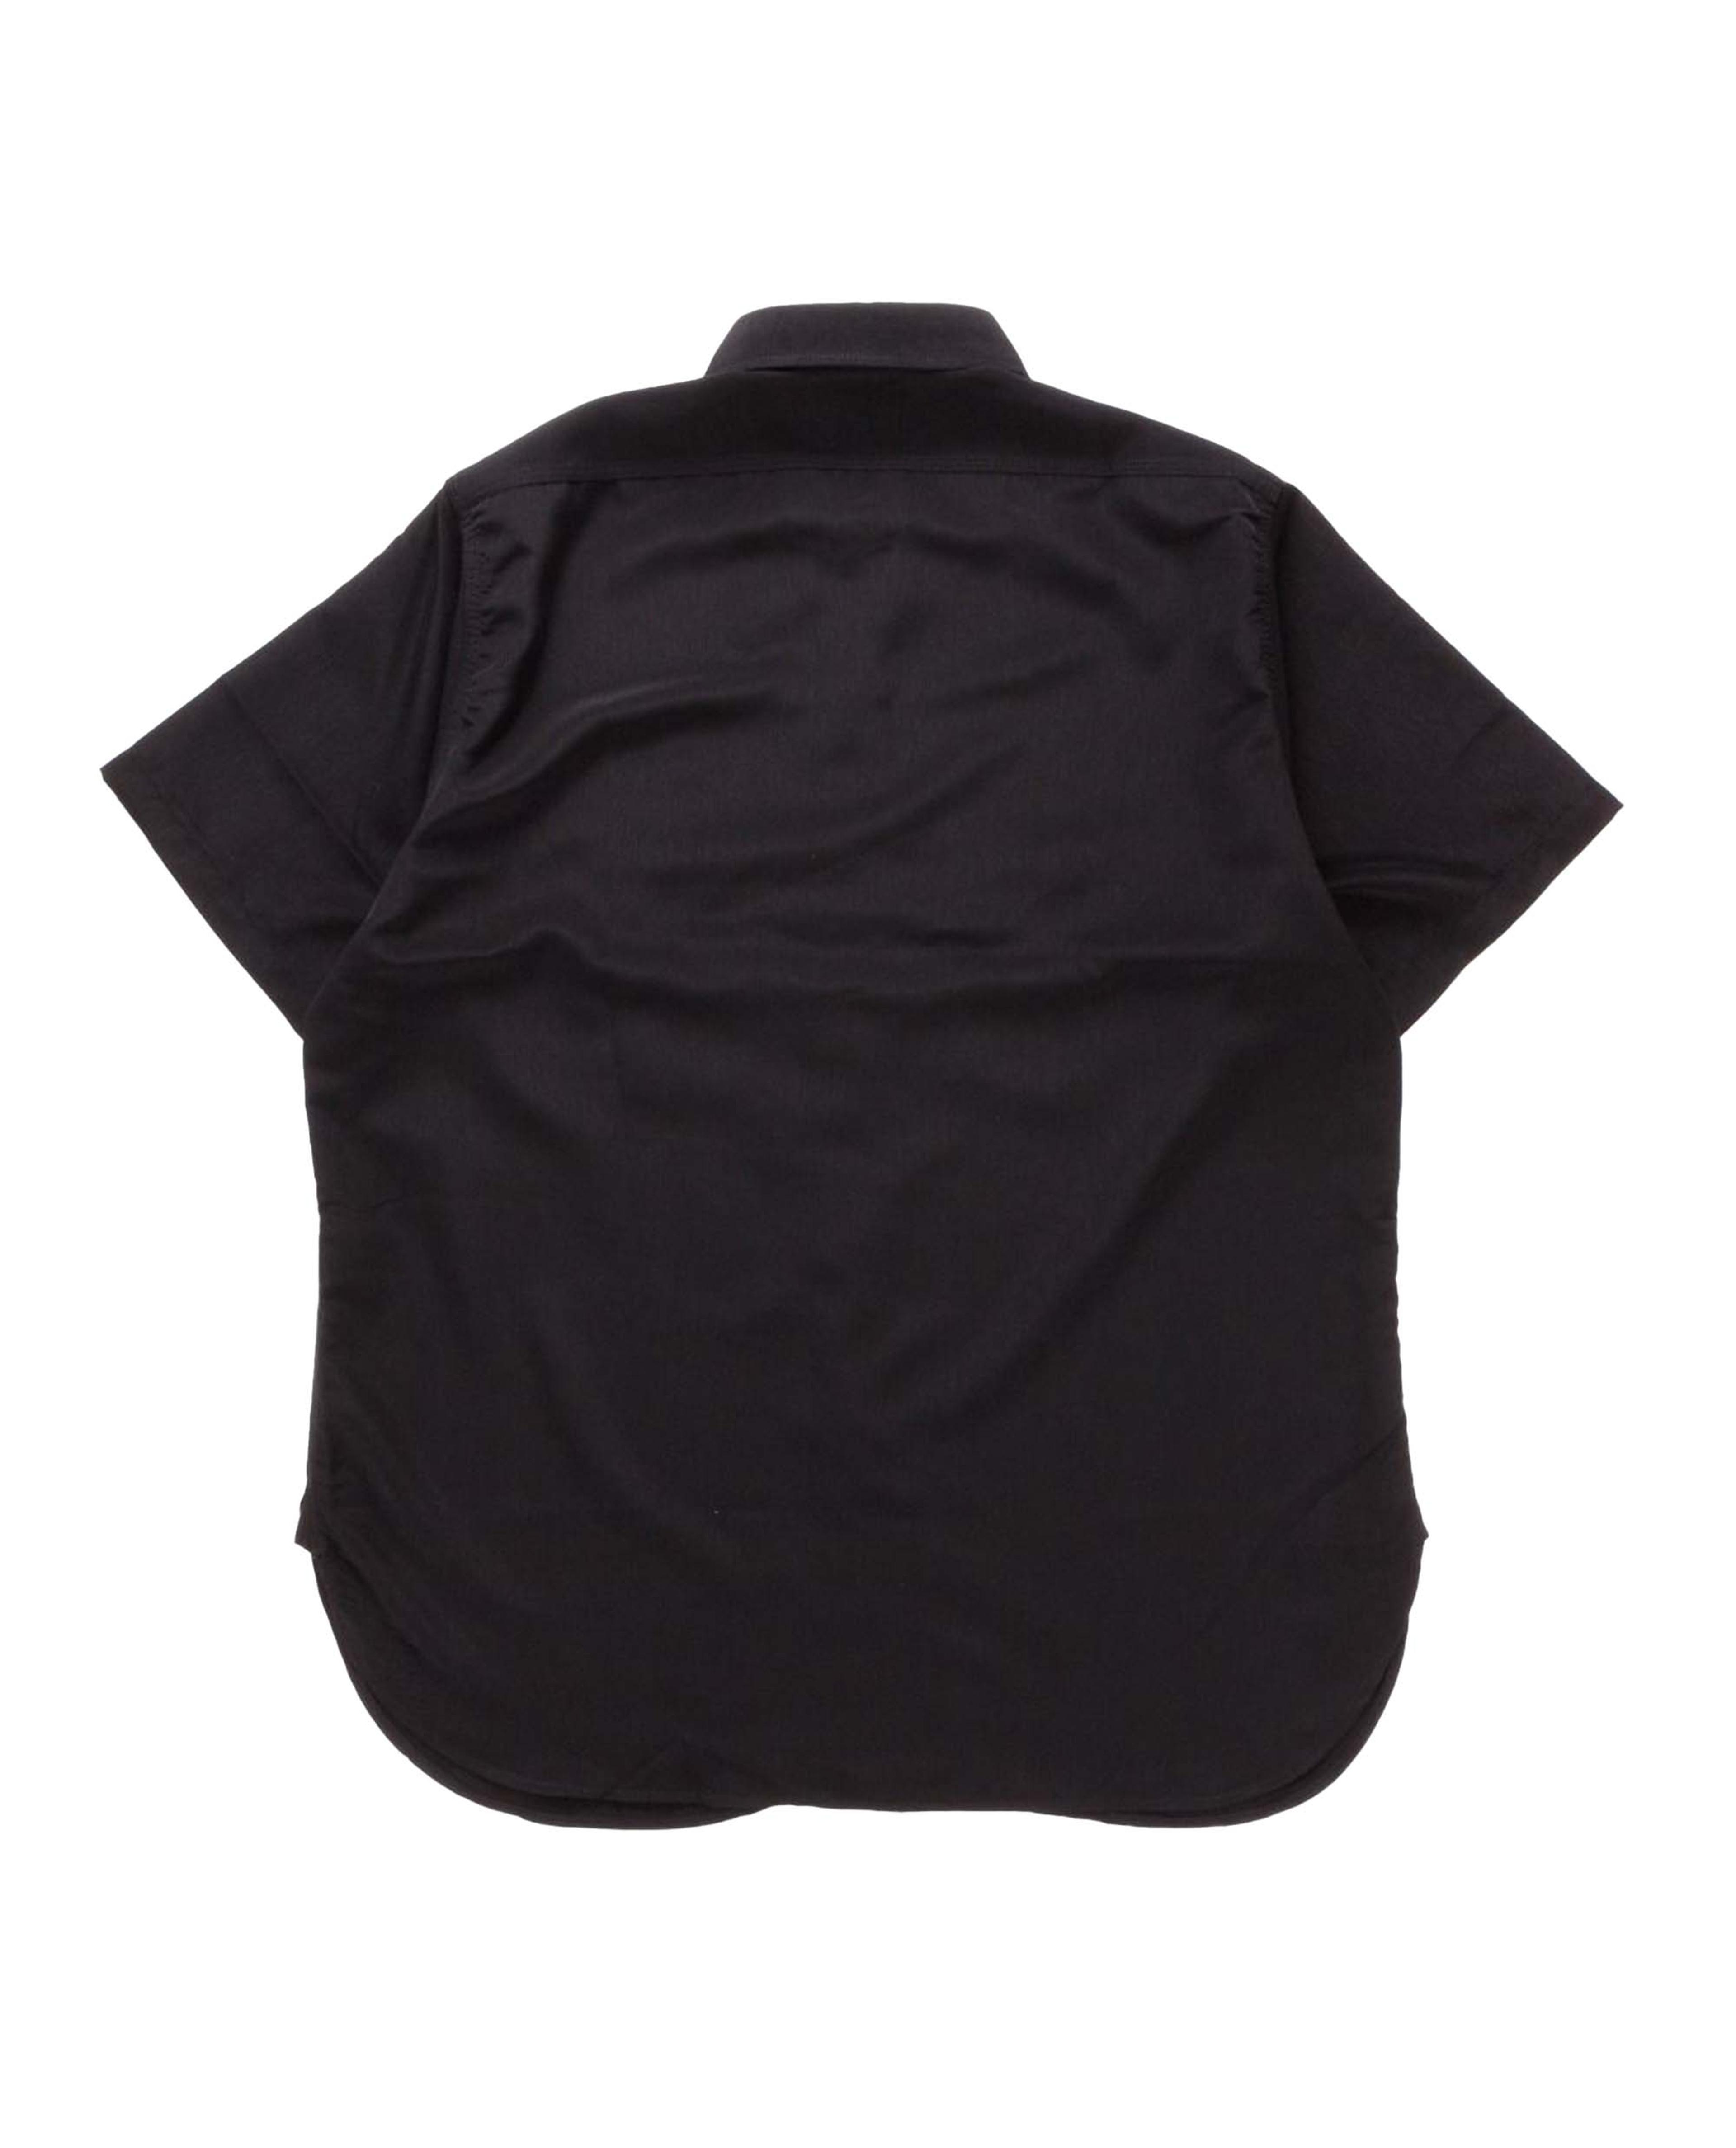 Alternate View 1 of Needles Short Sleeve Work Shirt - Poly Cloth